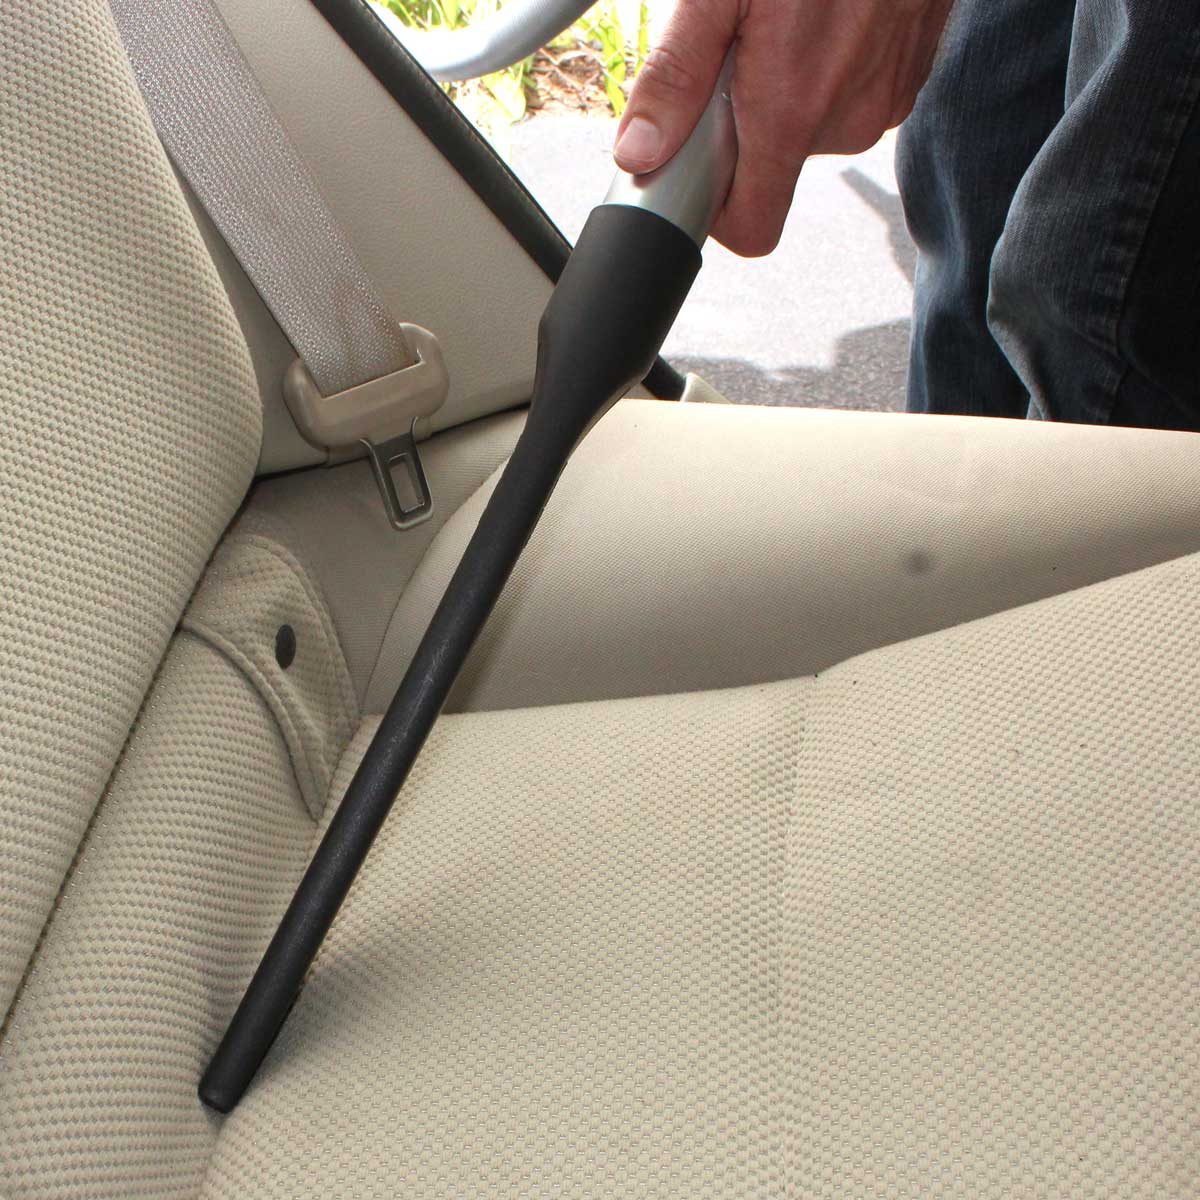 Vacuuming a cloth car seat